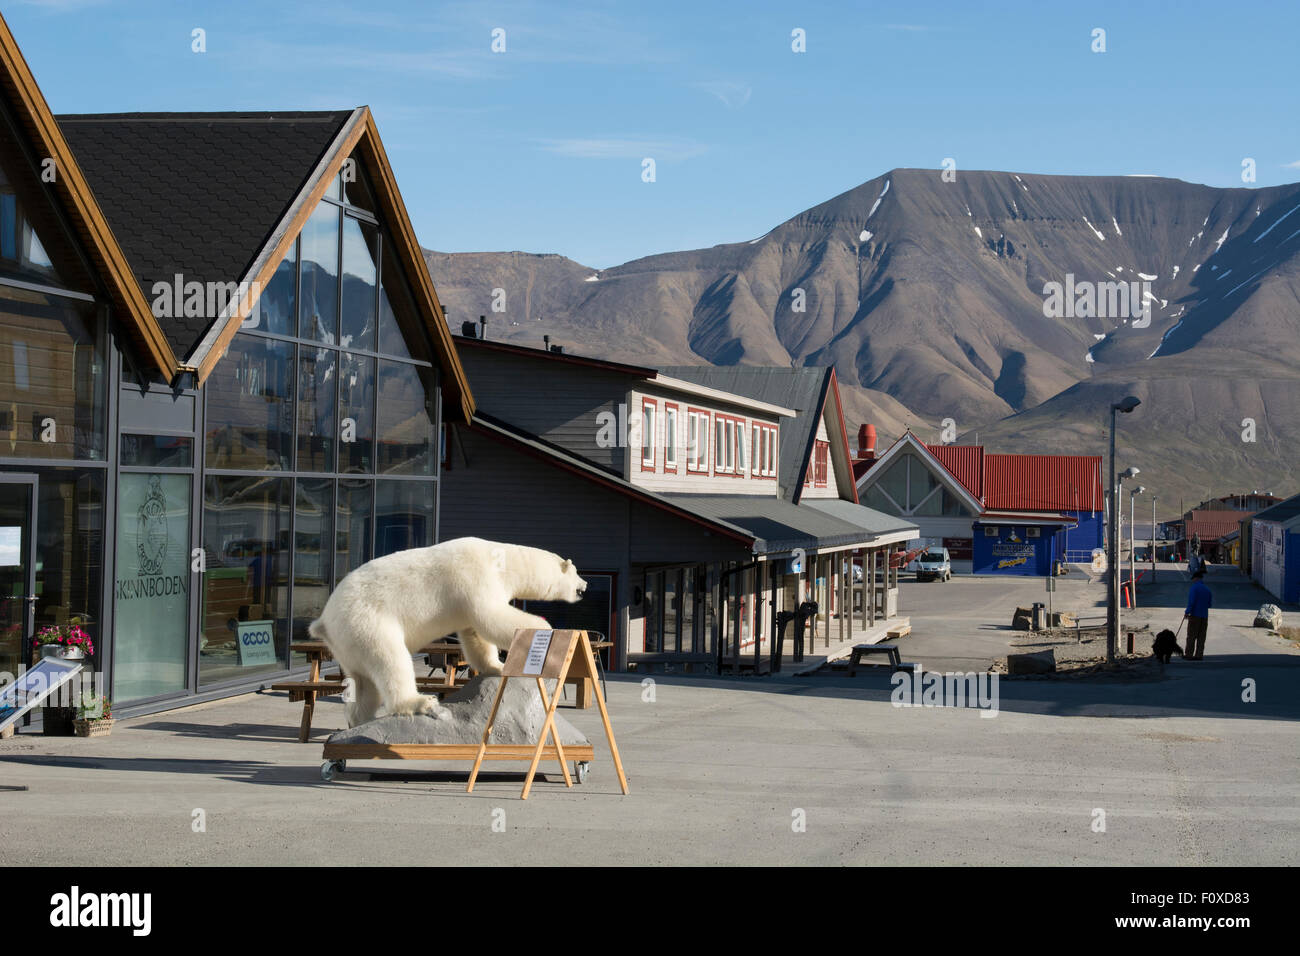 Norway, Barents Sea, Svalbard archipelago, Spitsbergen, capital city of Longyearbyen, downtown shopping area with stuffed bear. Stock Photo